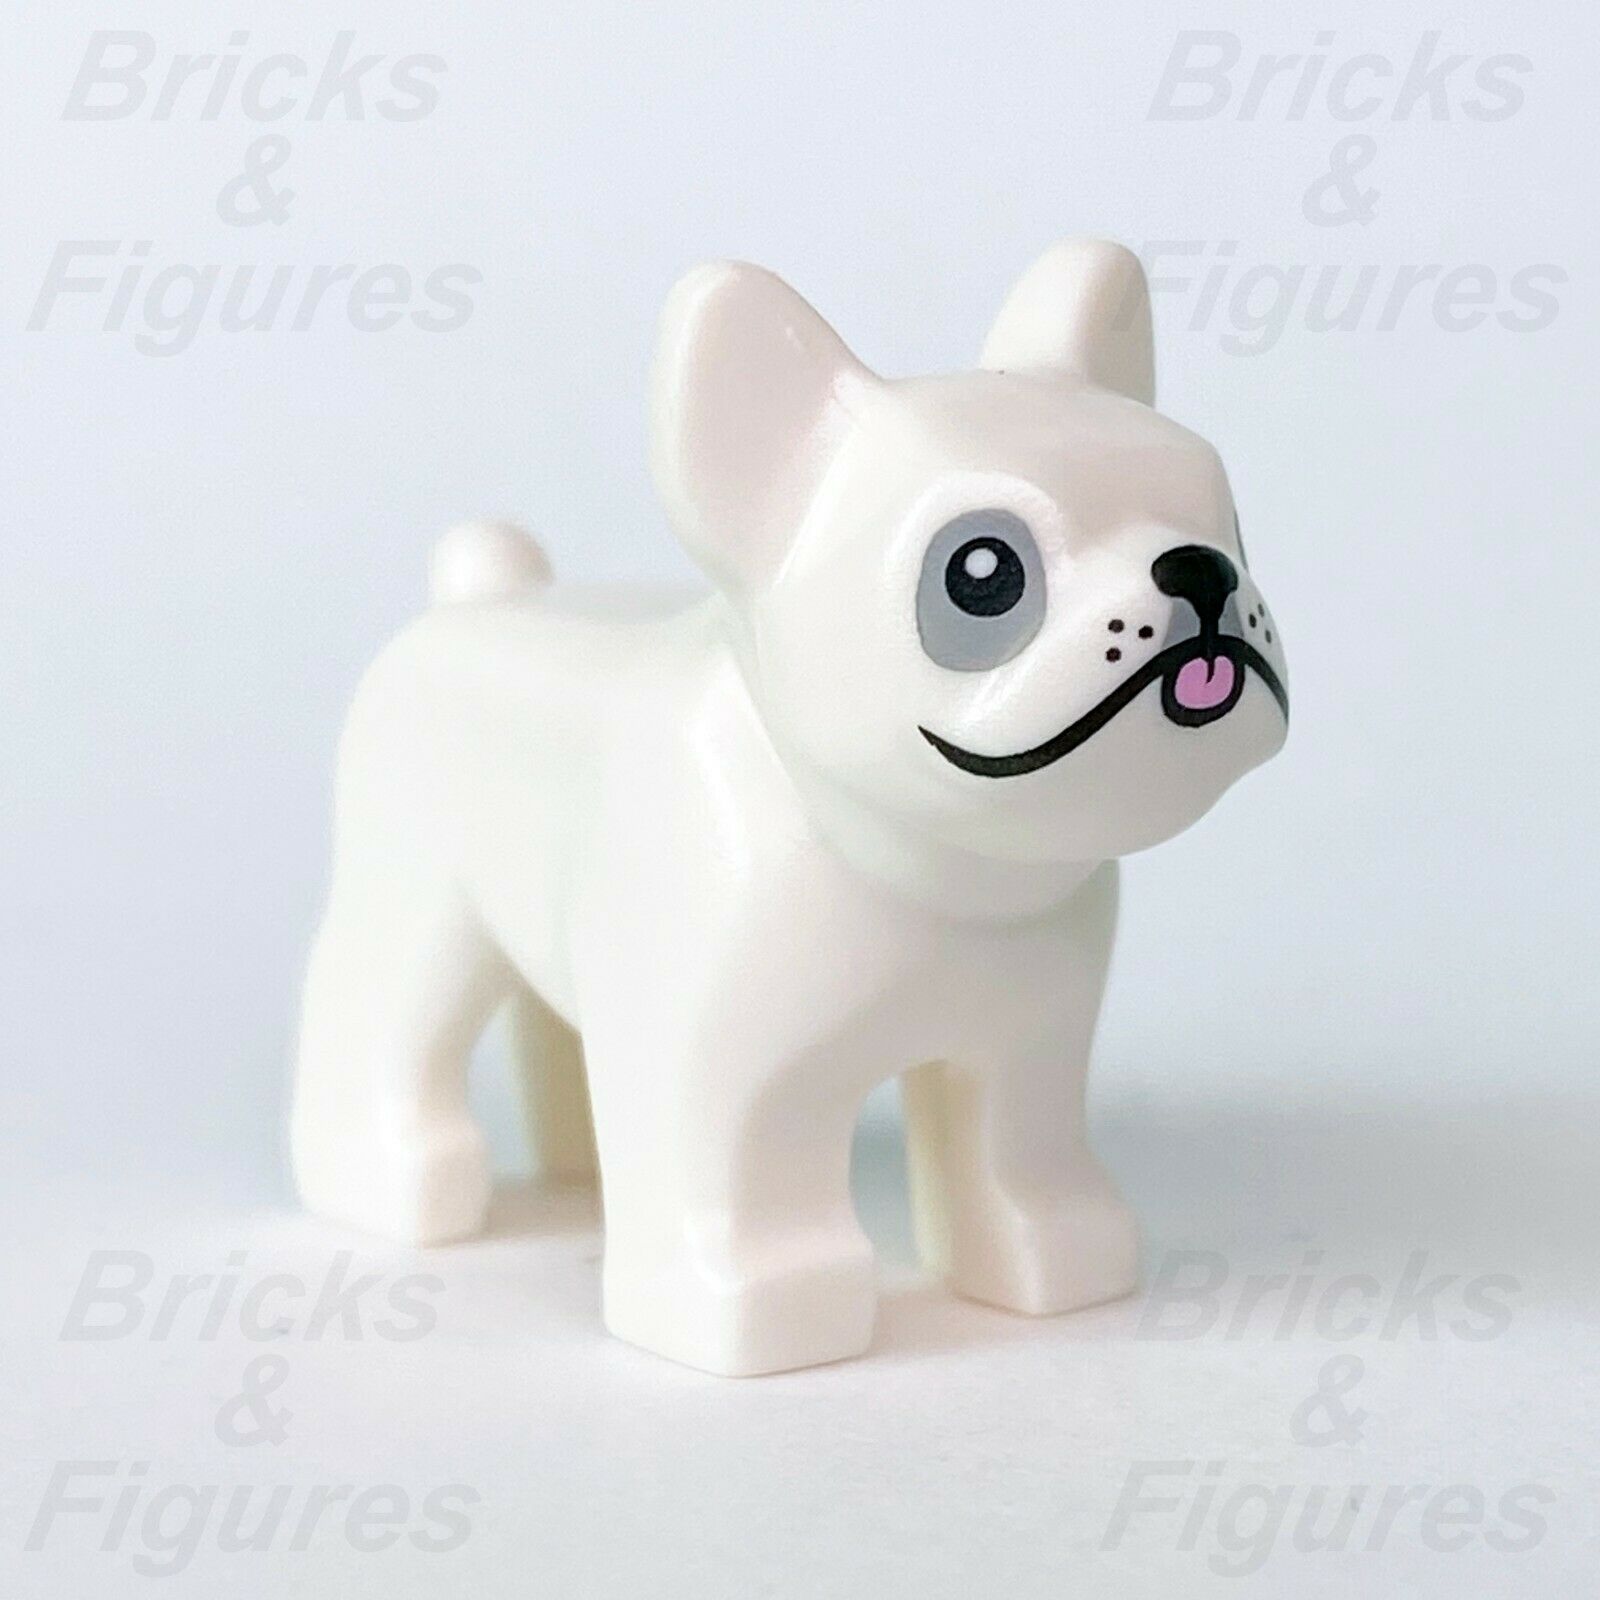 Collectible Minifigures LEGO French Bulldog Eye Patch Dog Animal Part 71025 - Bricks & Figures